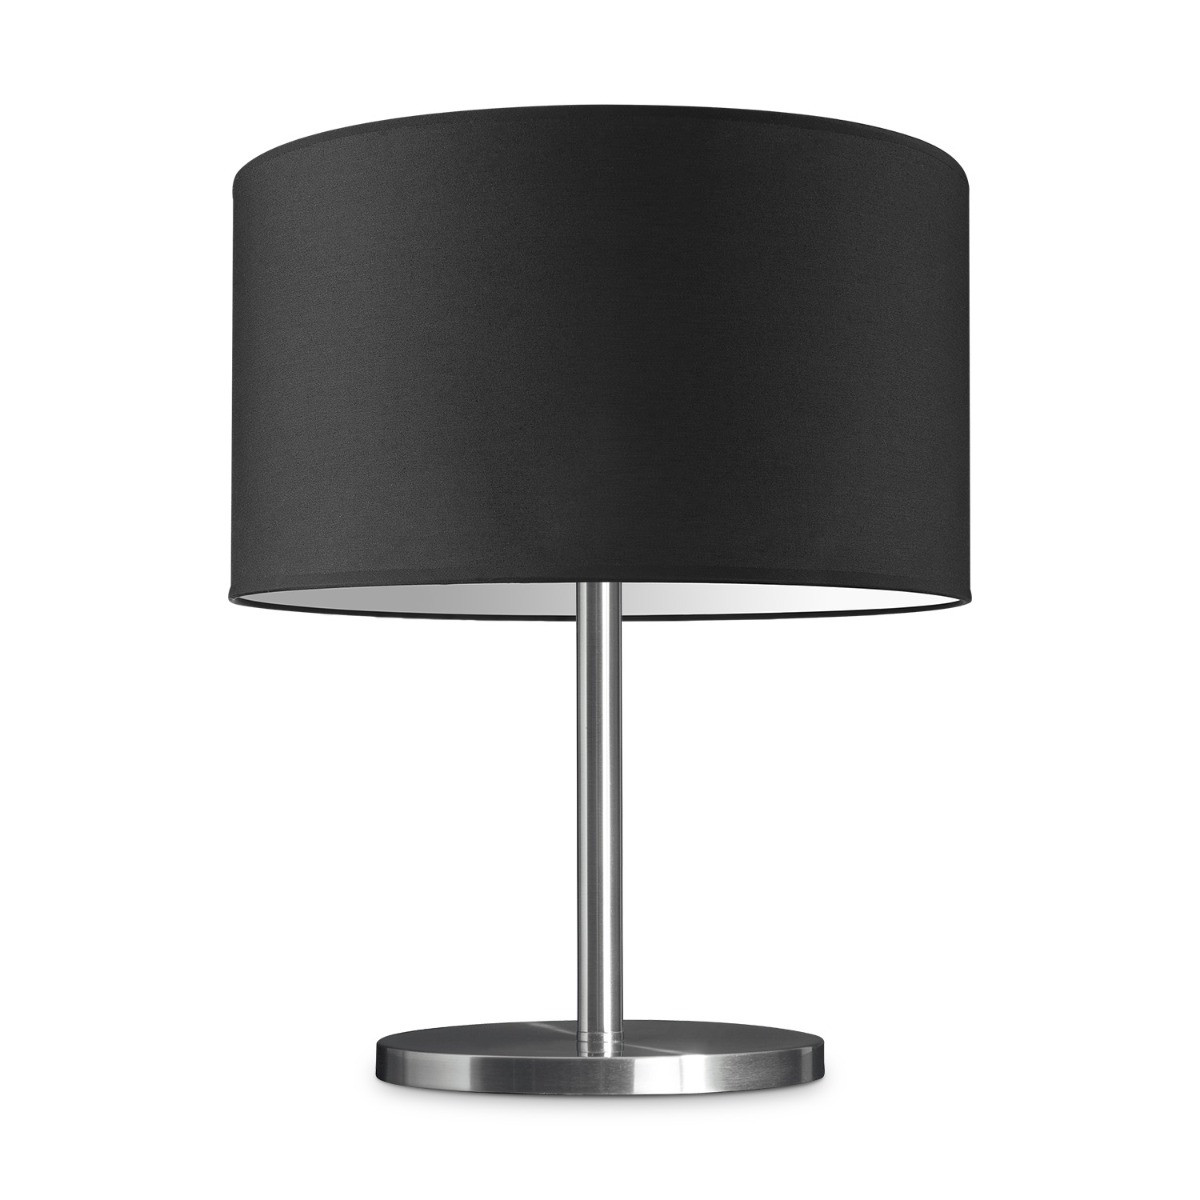 Light depot - tafellamp mauro bling Ø 40 cm - zwart - Outlet